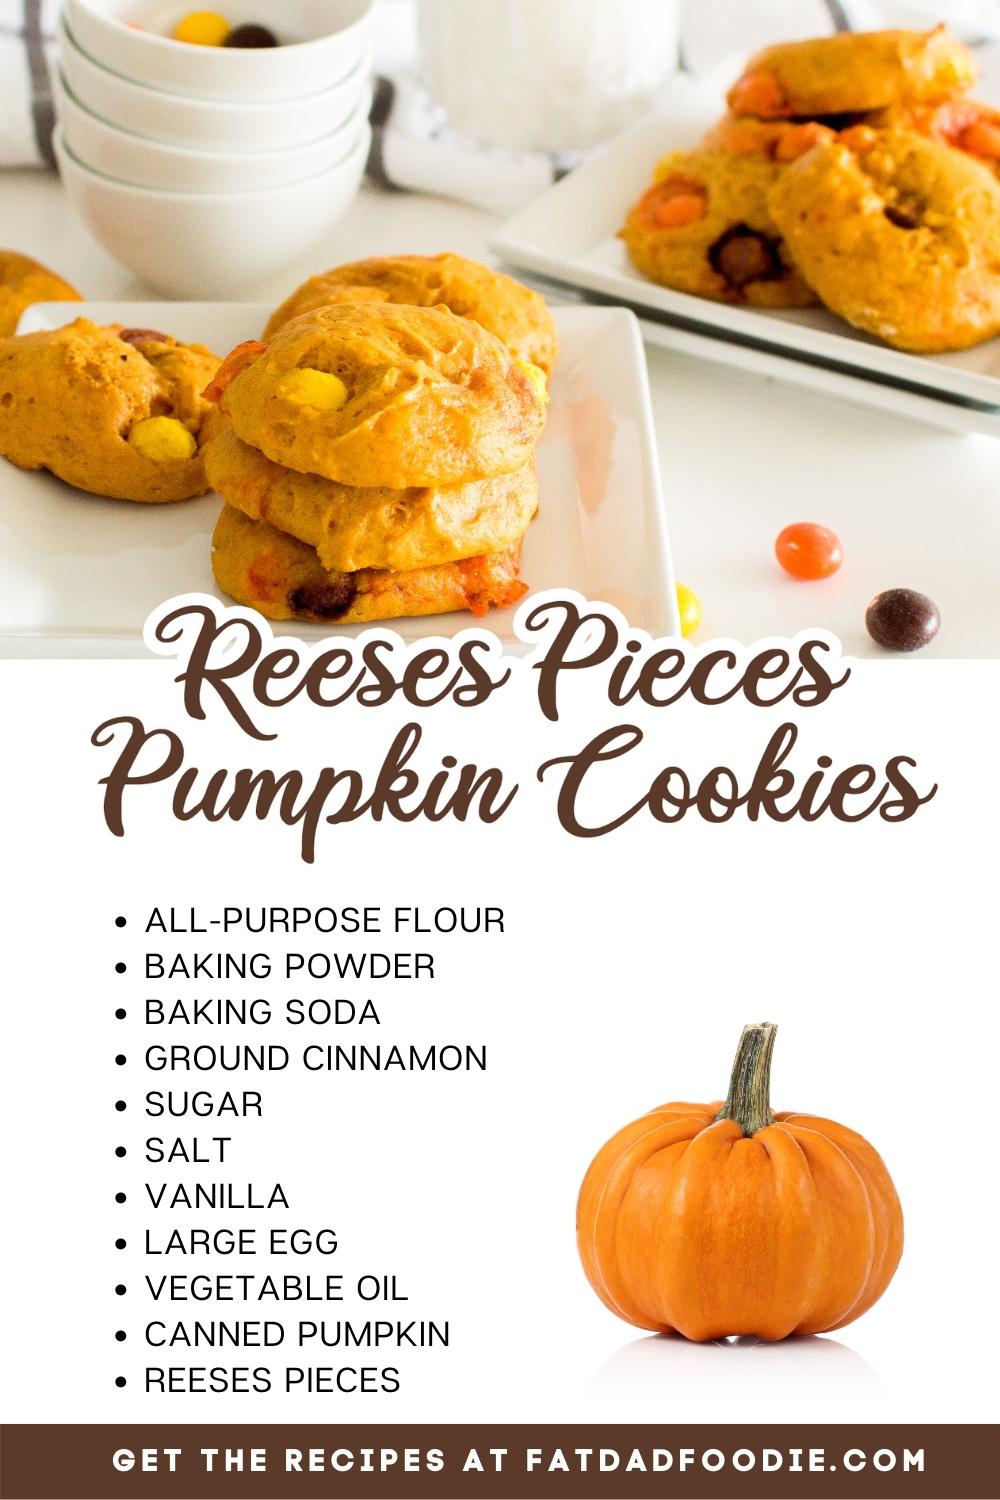 reeses pieces pumpkin cookies with ingredients